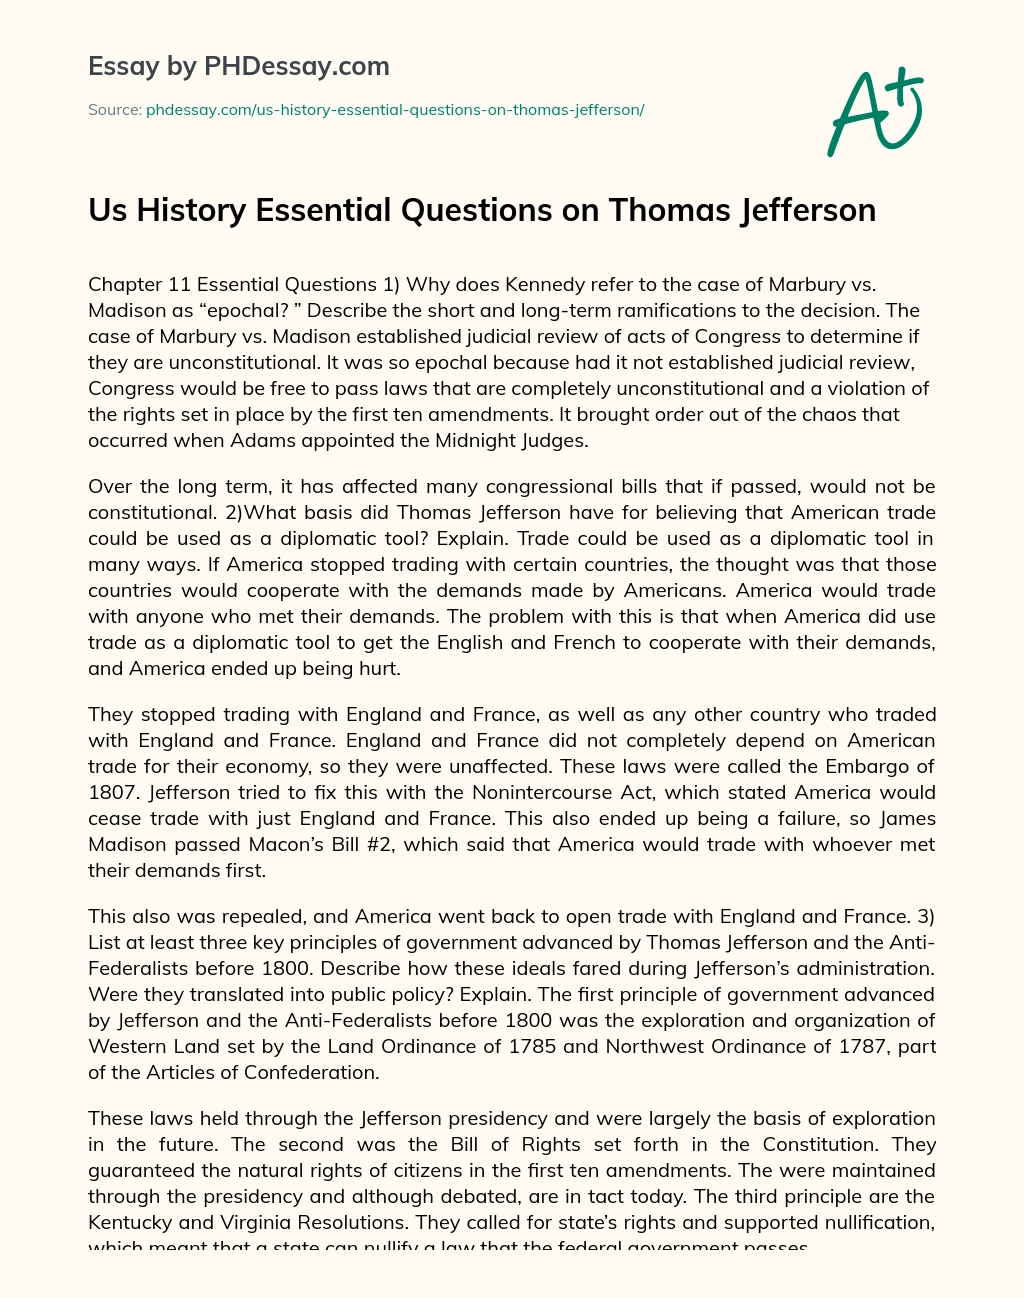 Us History Essential Questions on Thomas Jefferson essay